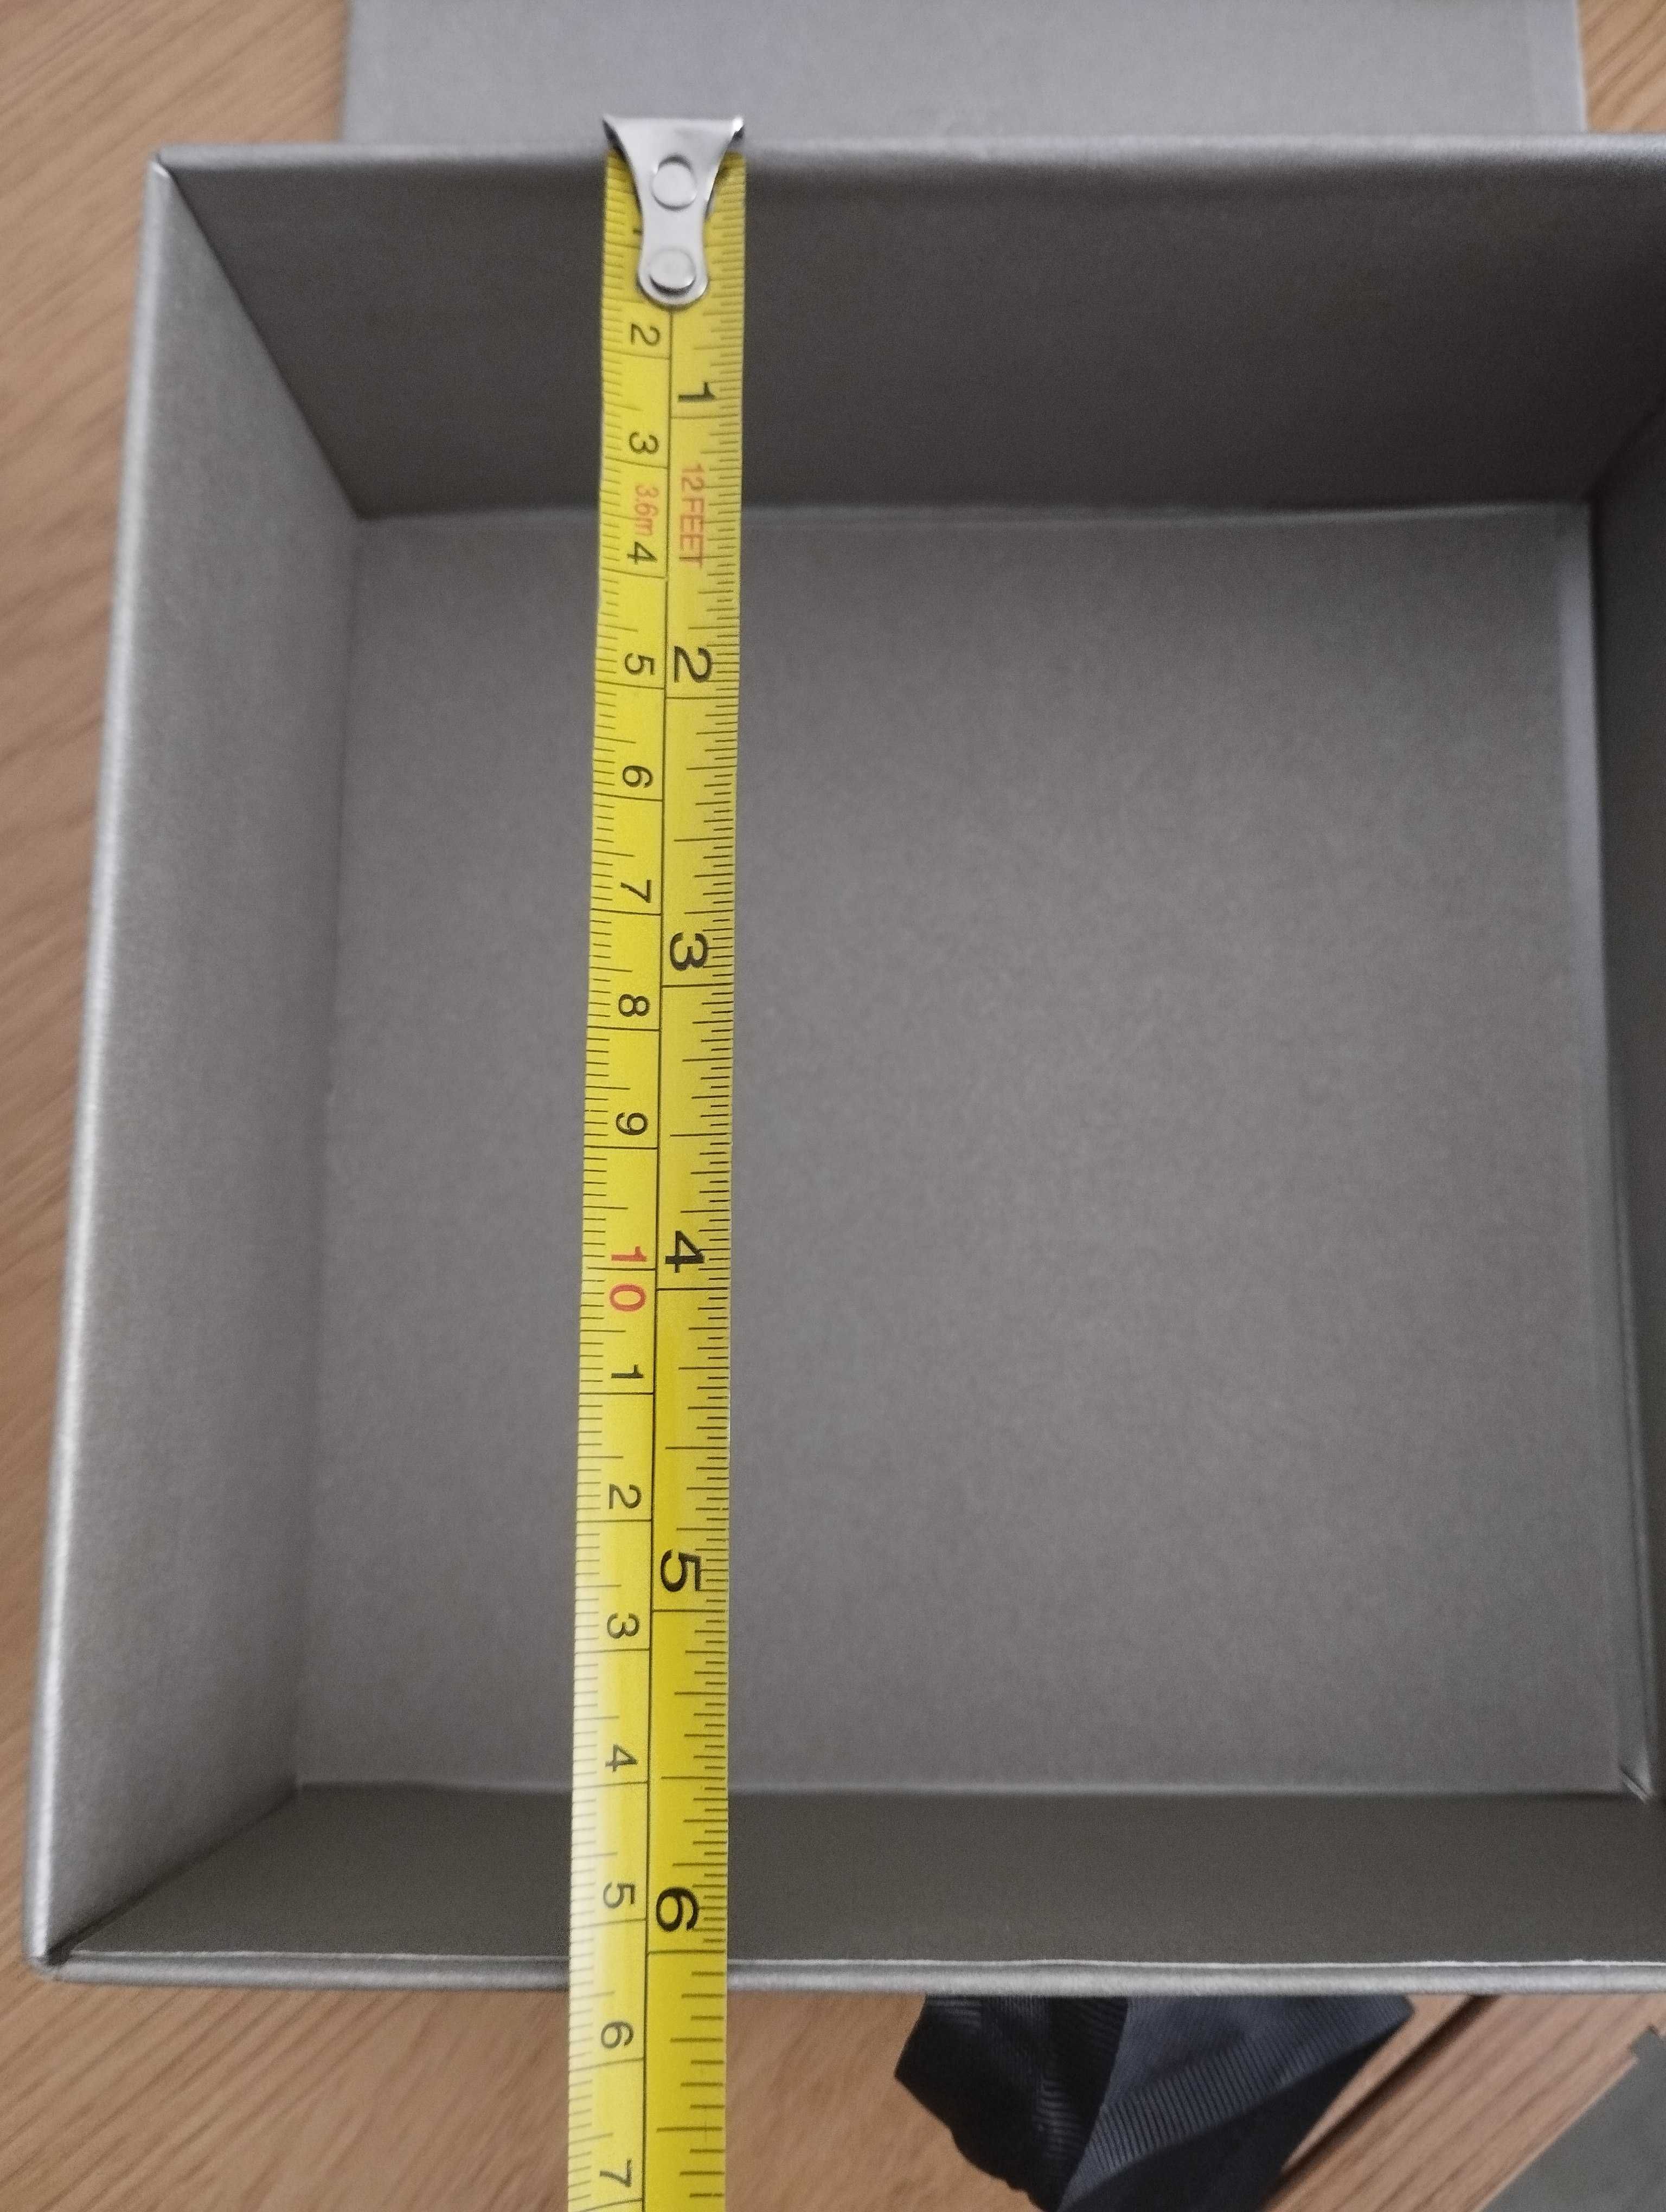 Новая подарочная коробка (упаковка) Giorgio Armani 15 на 15 см